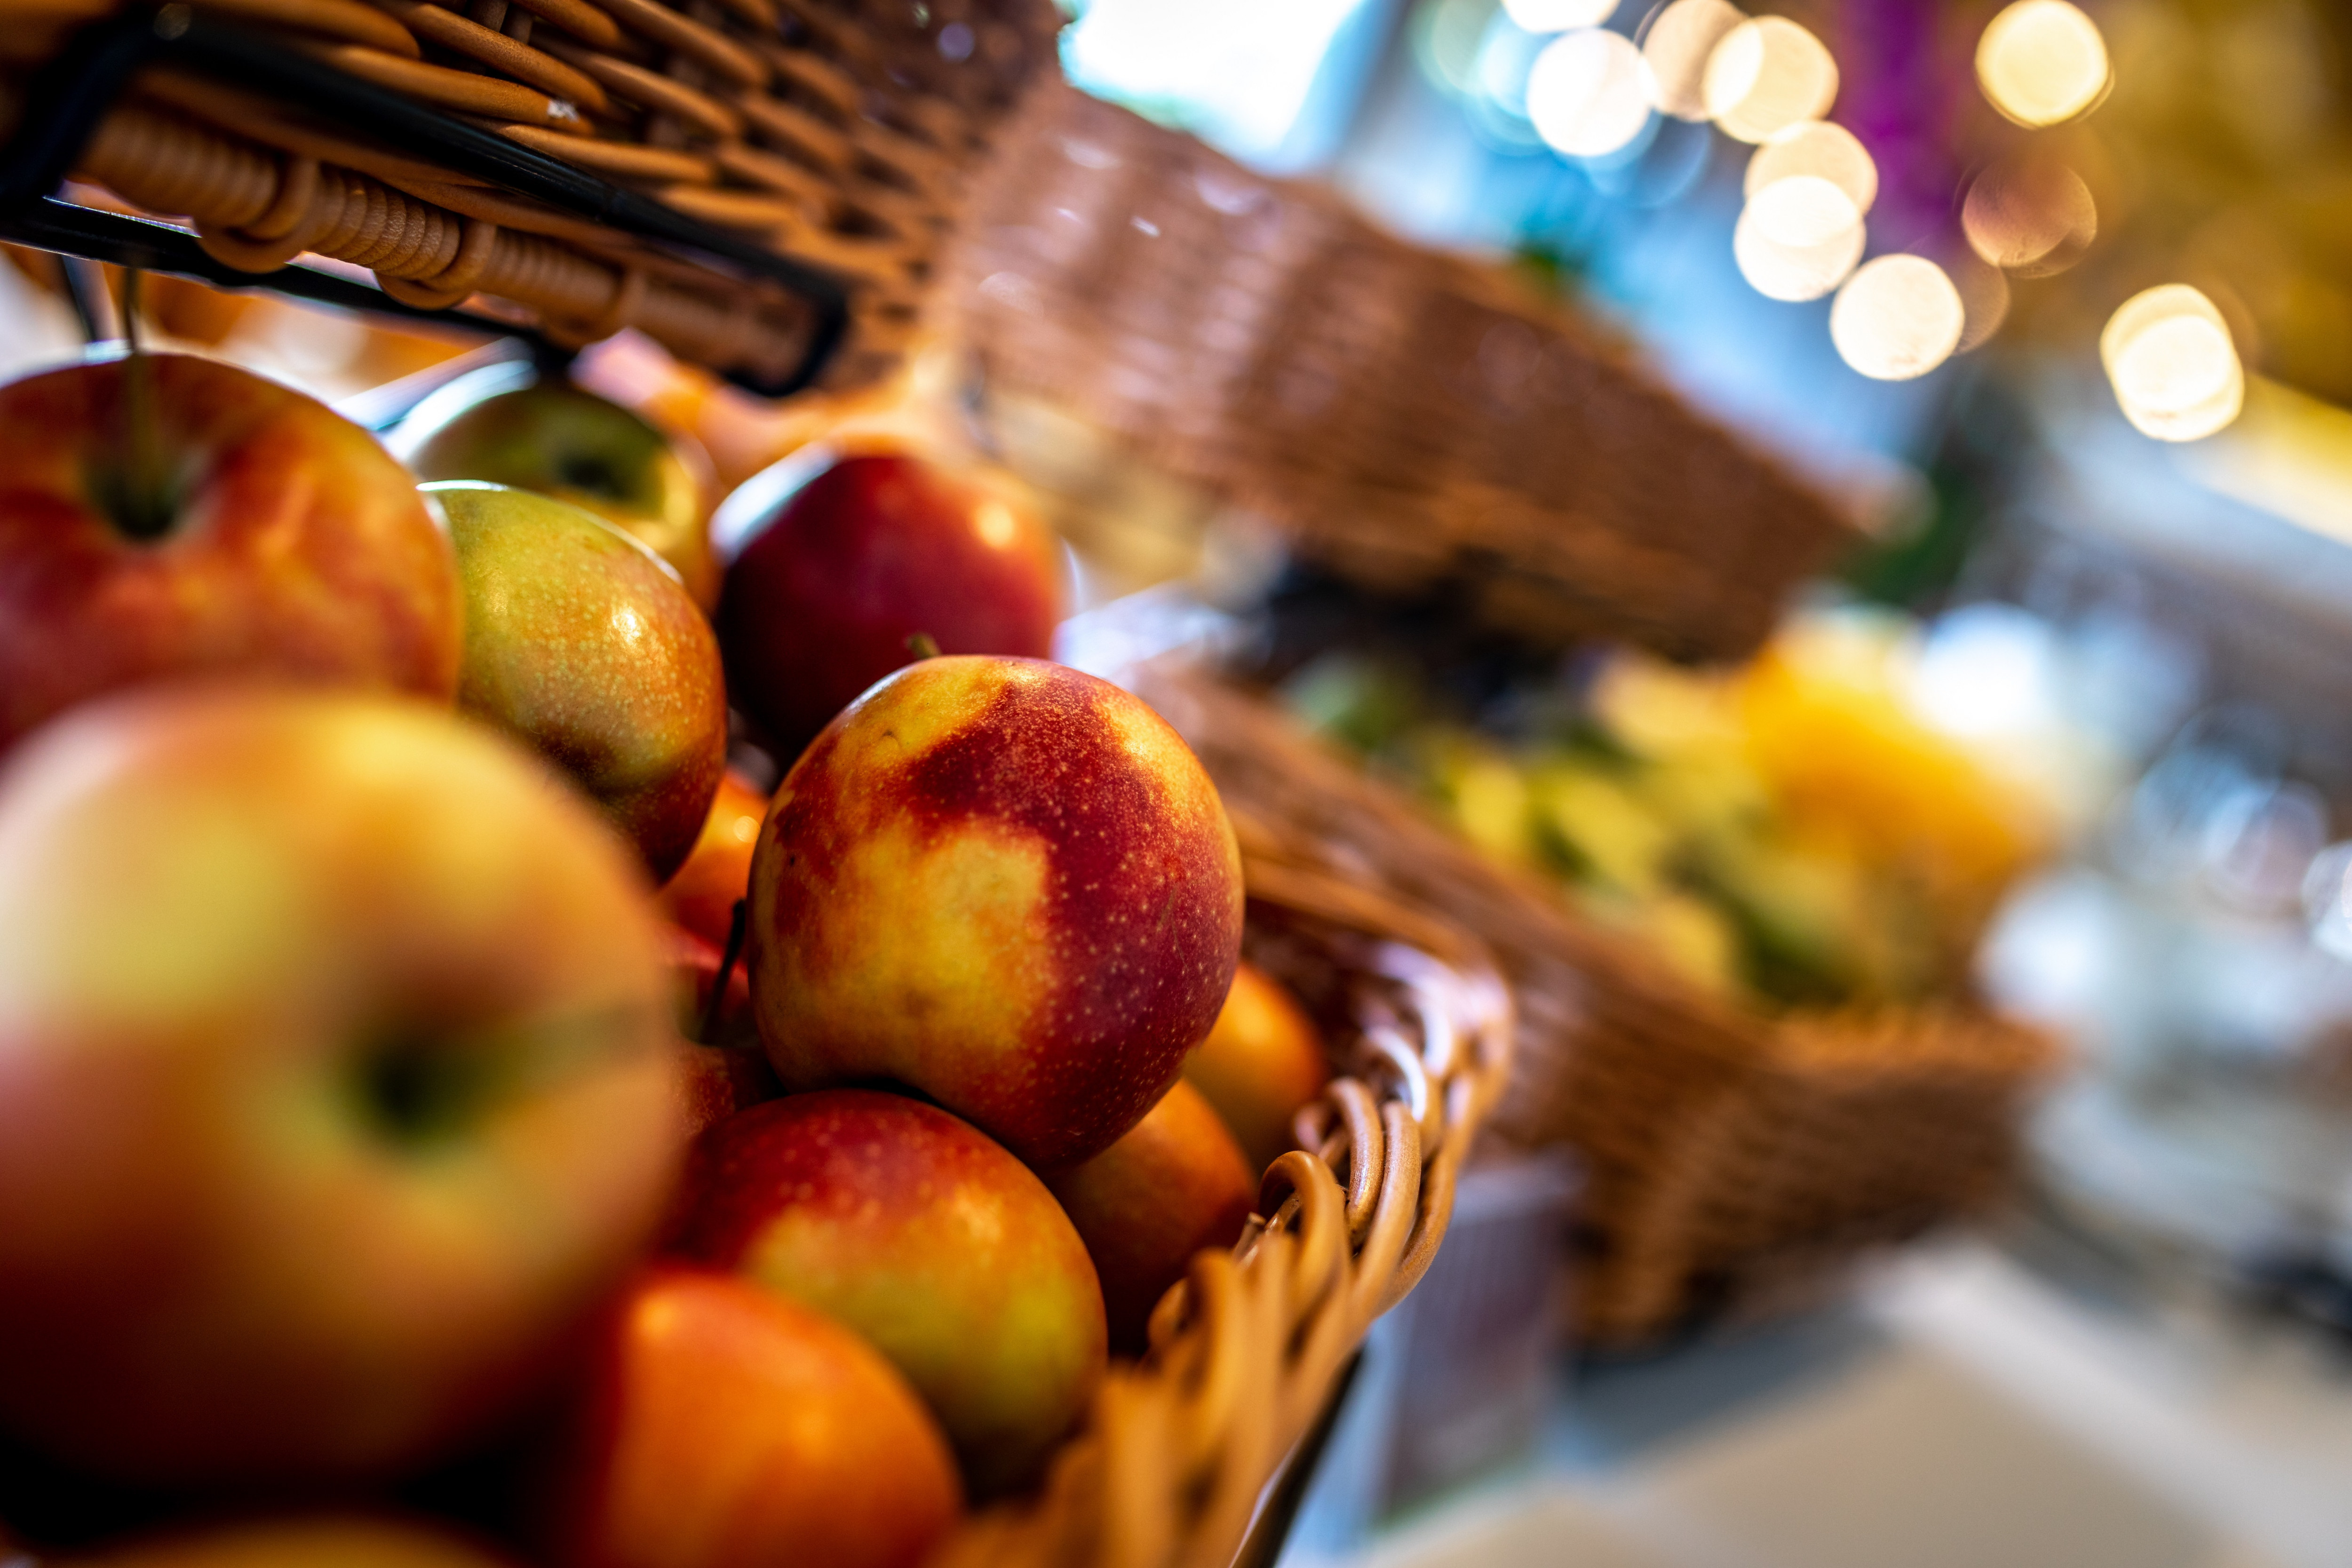 breakfast area, basket of apples